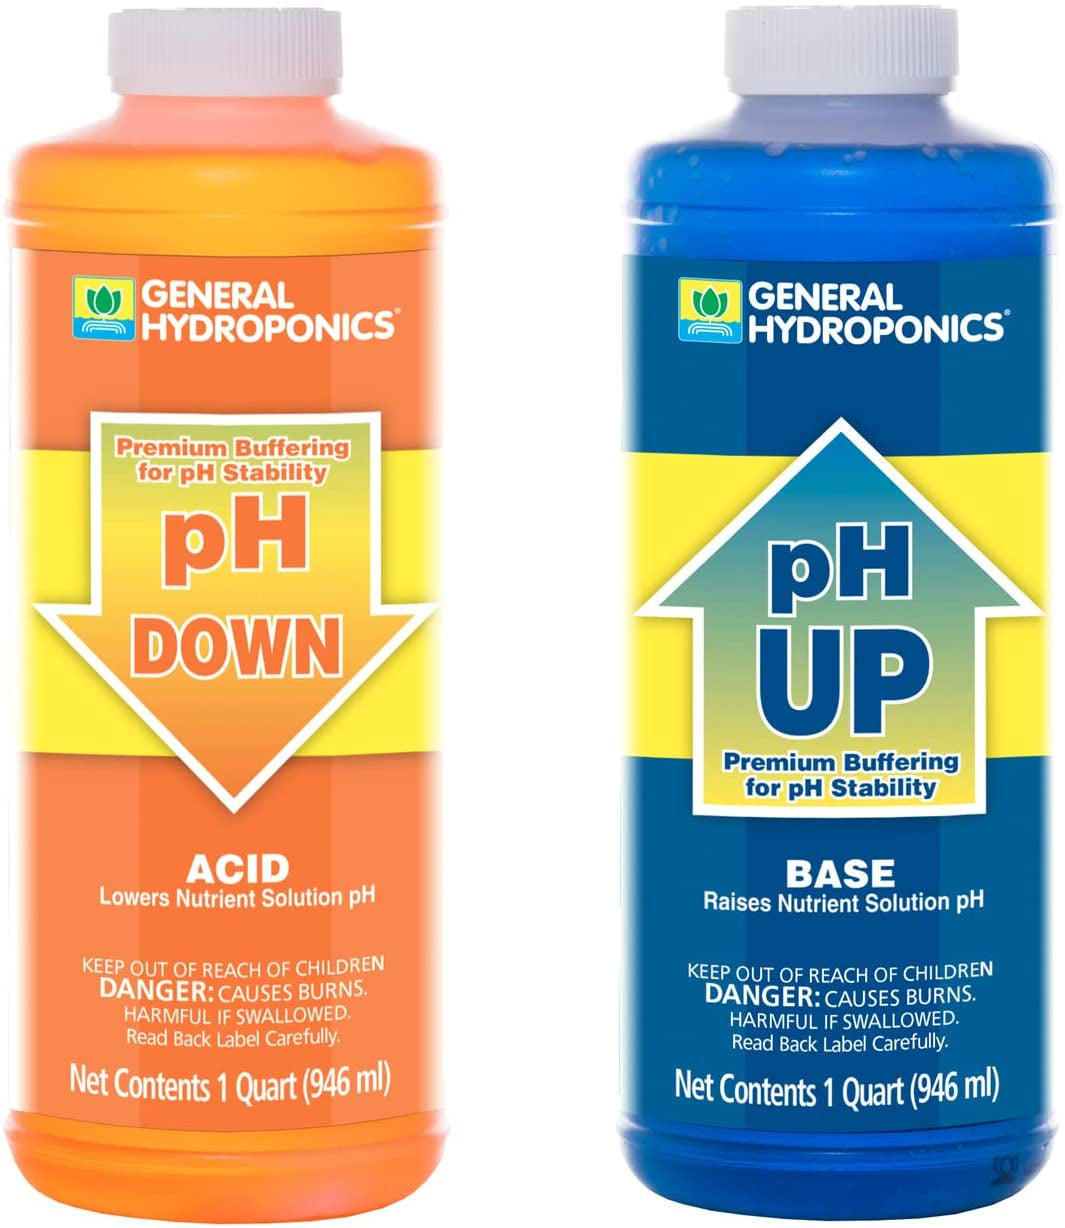 General Hydroponics Ph up and Ph down Liquids - Stabilize Nutrient Ph in Hydroponics, 1 Qt. Bottles